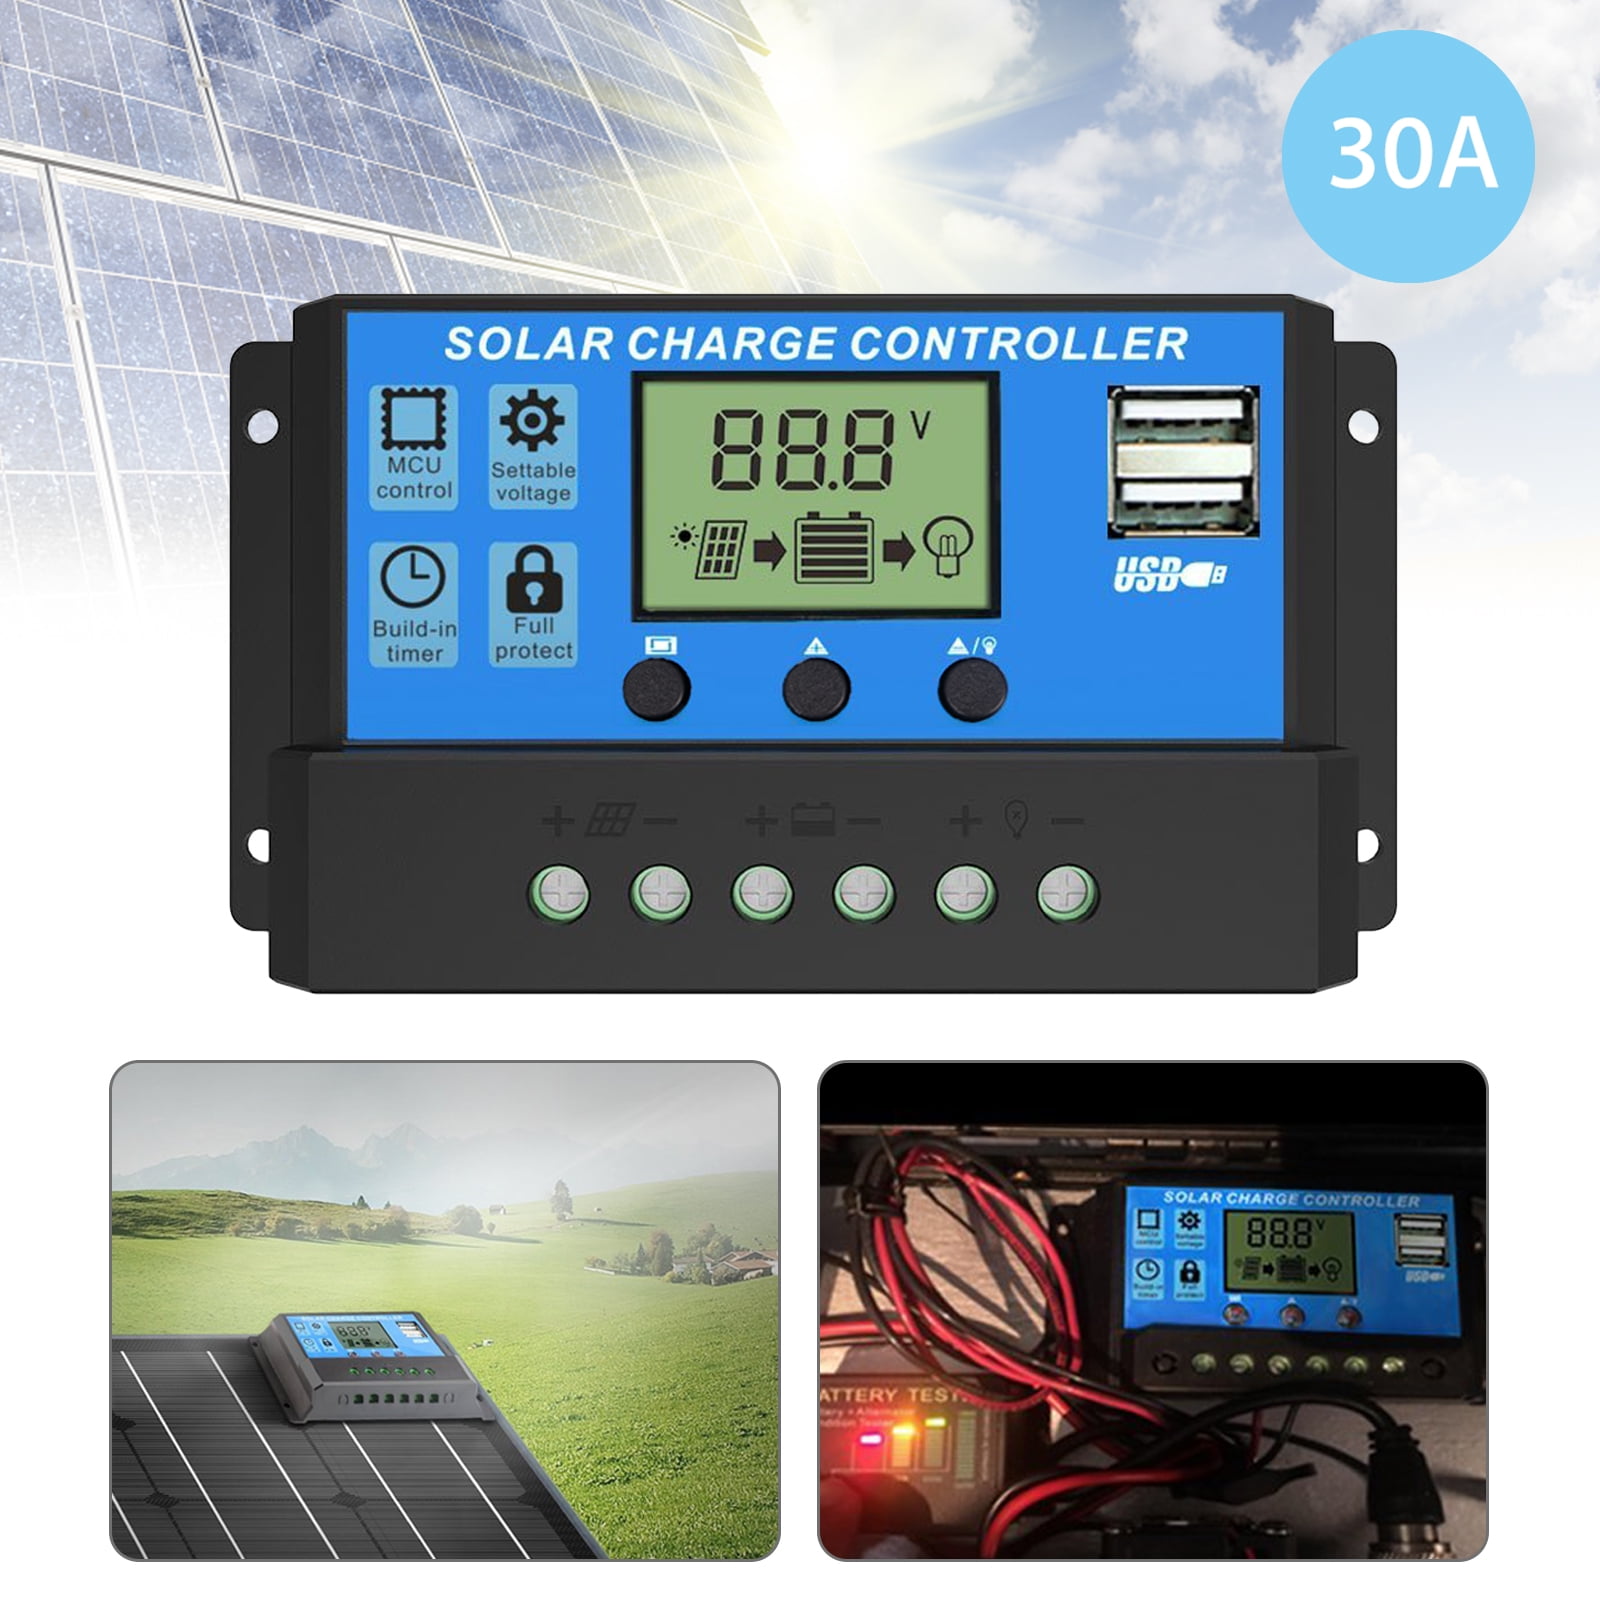 Solar Charge Controller Model W88-C 12V/24V 30A New - USA Seller